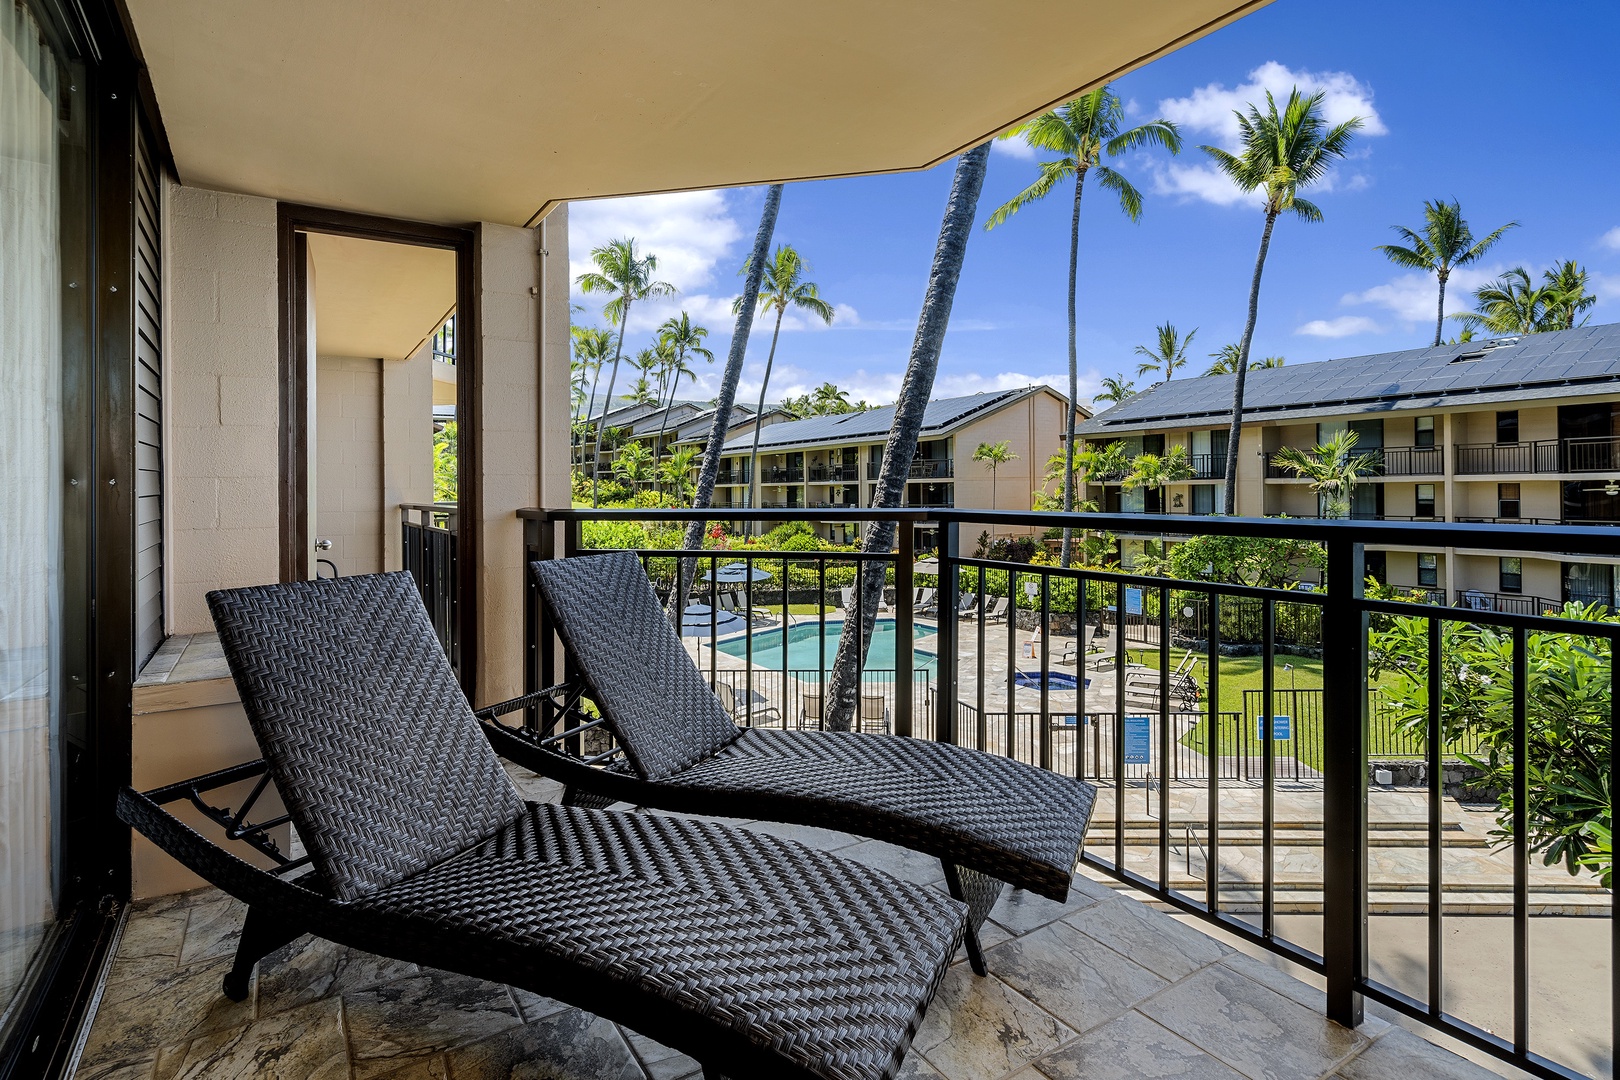 Kailua Kona Vacation Rentals, Kona Makai 6201 - 2 loungers on the Lanai for your enjoyment and relaxation